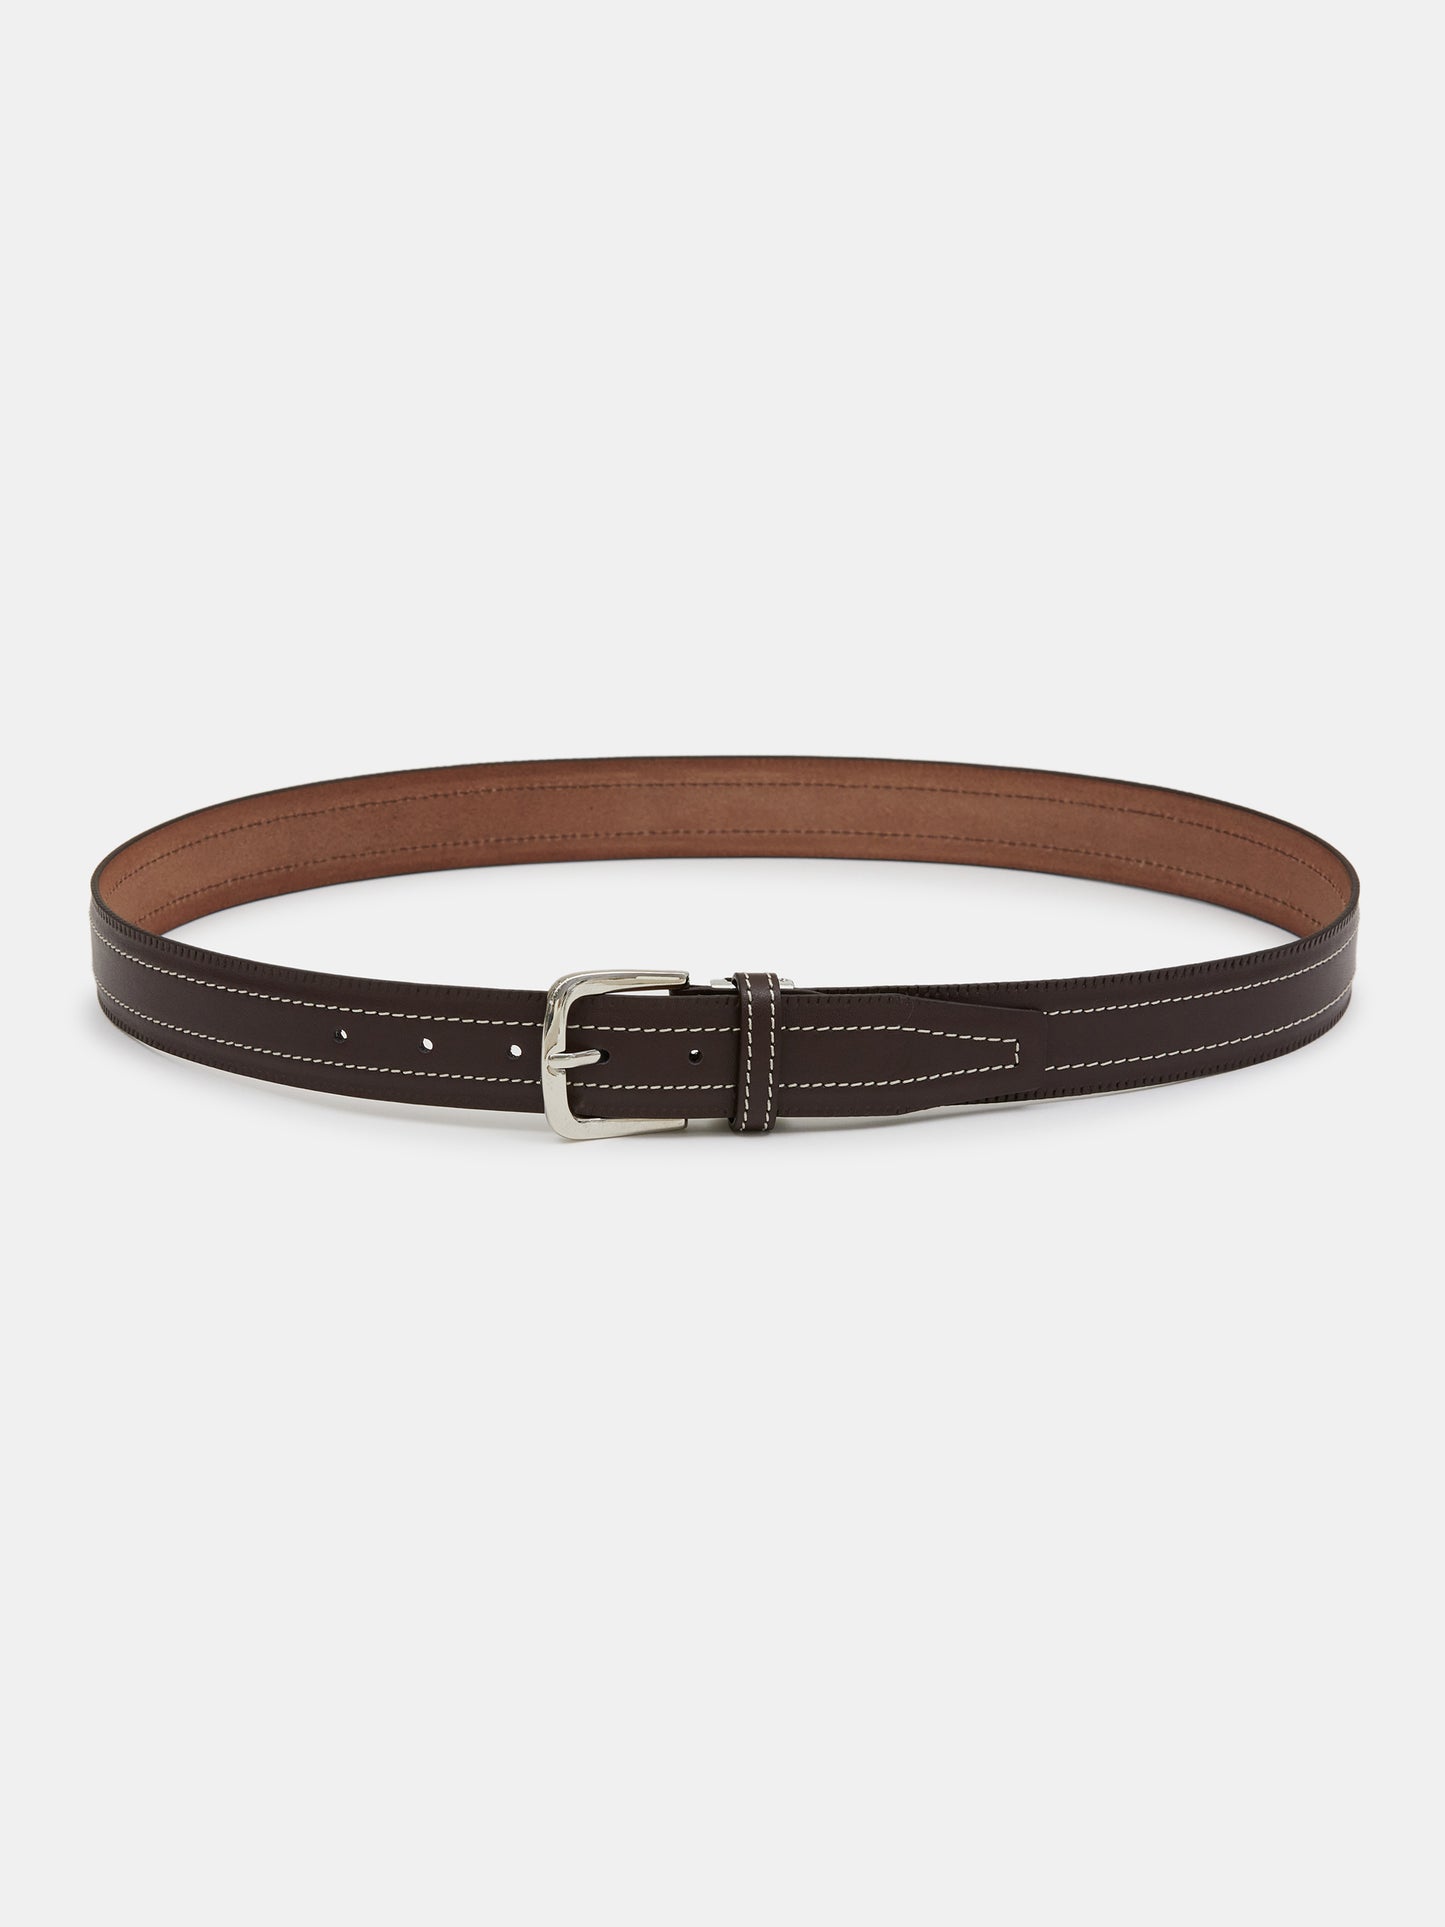 Stitch Leather Belt, Brown